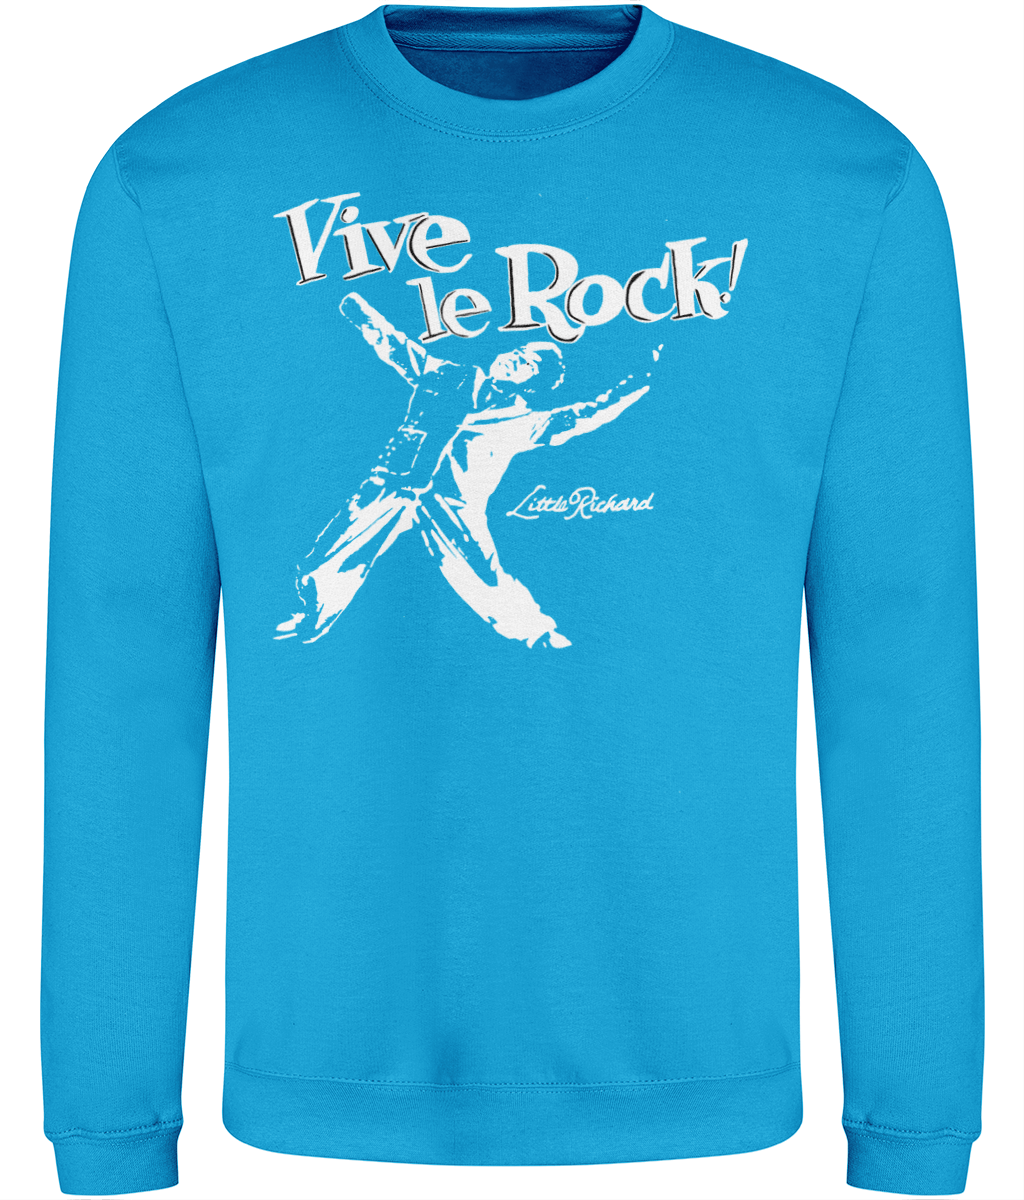 festival-GAS Shirts GAS T Roll Little n Shir Wembley Richard-Sweatshirt-1972 T Rock –